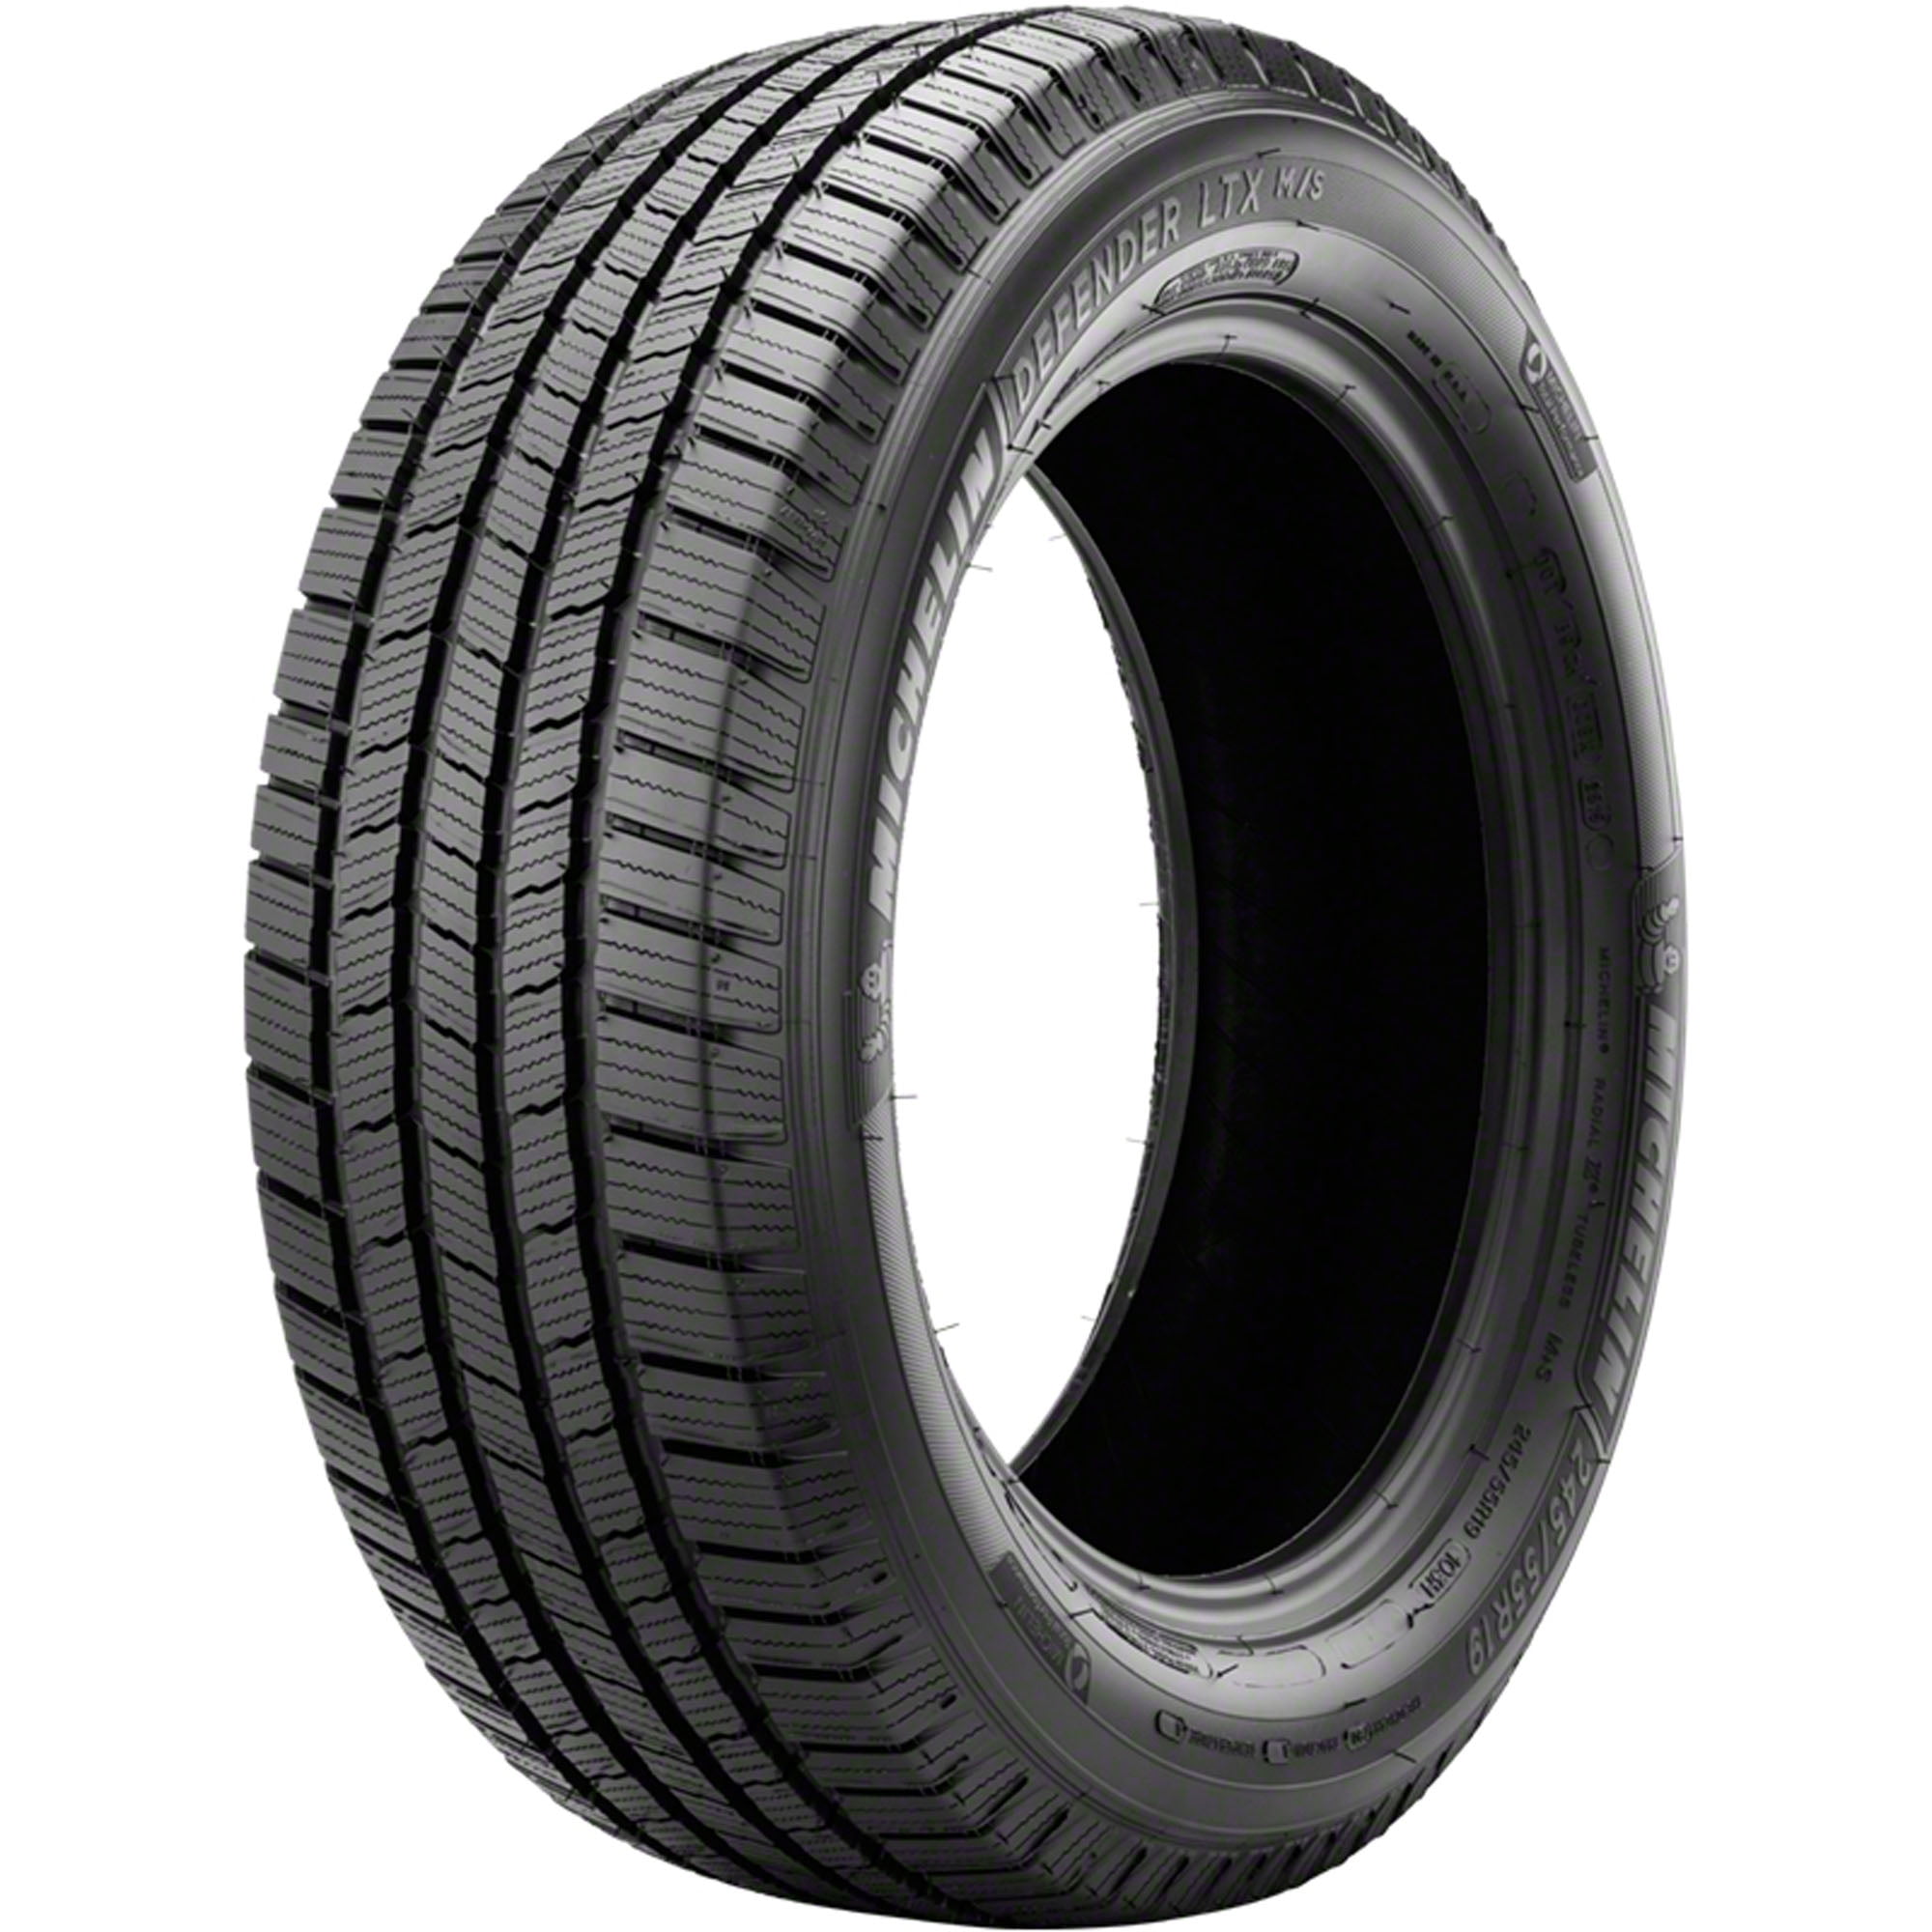 Michelin Defender LTX M/S All Season 275/50R21 113H XL Light Truck Tire